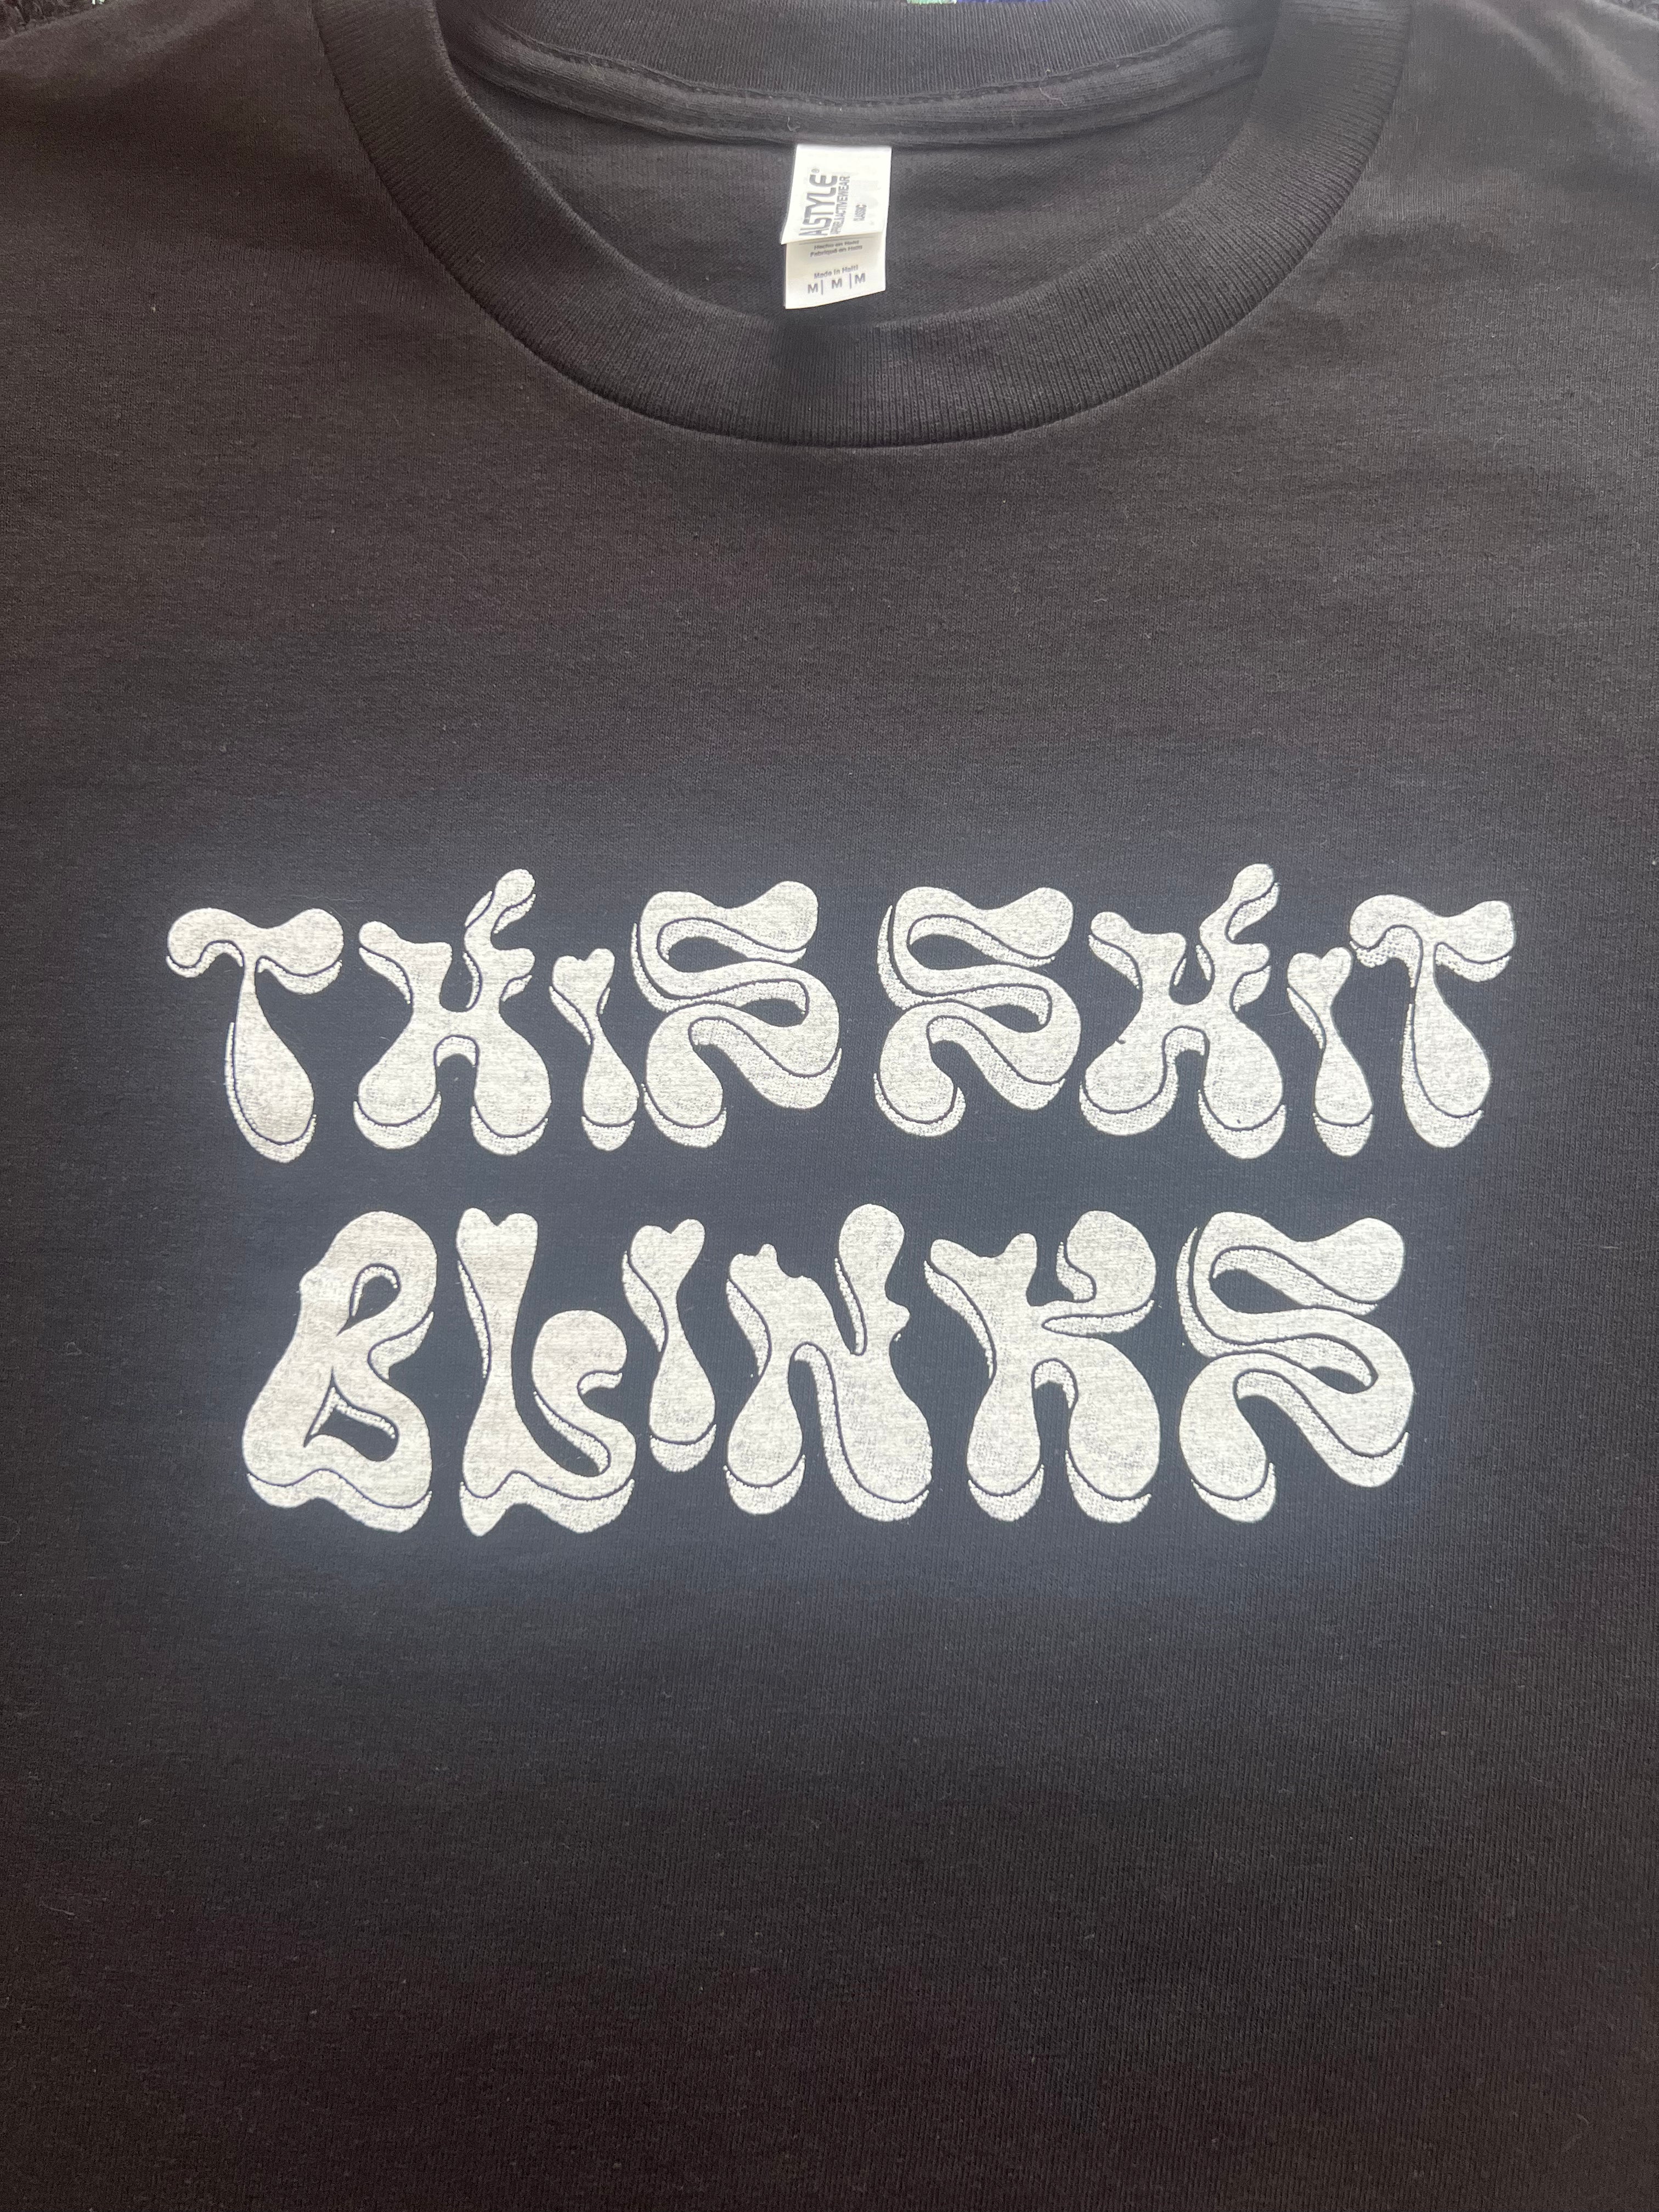 This Shit Blinks T-shirt